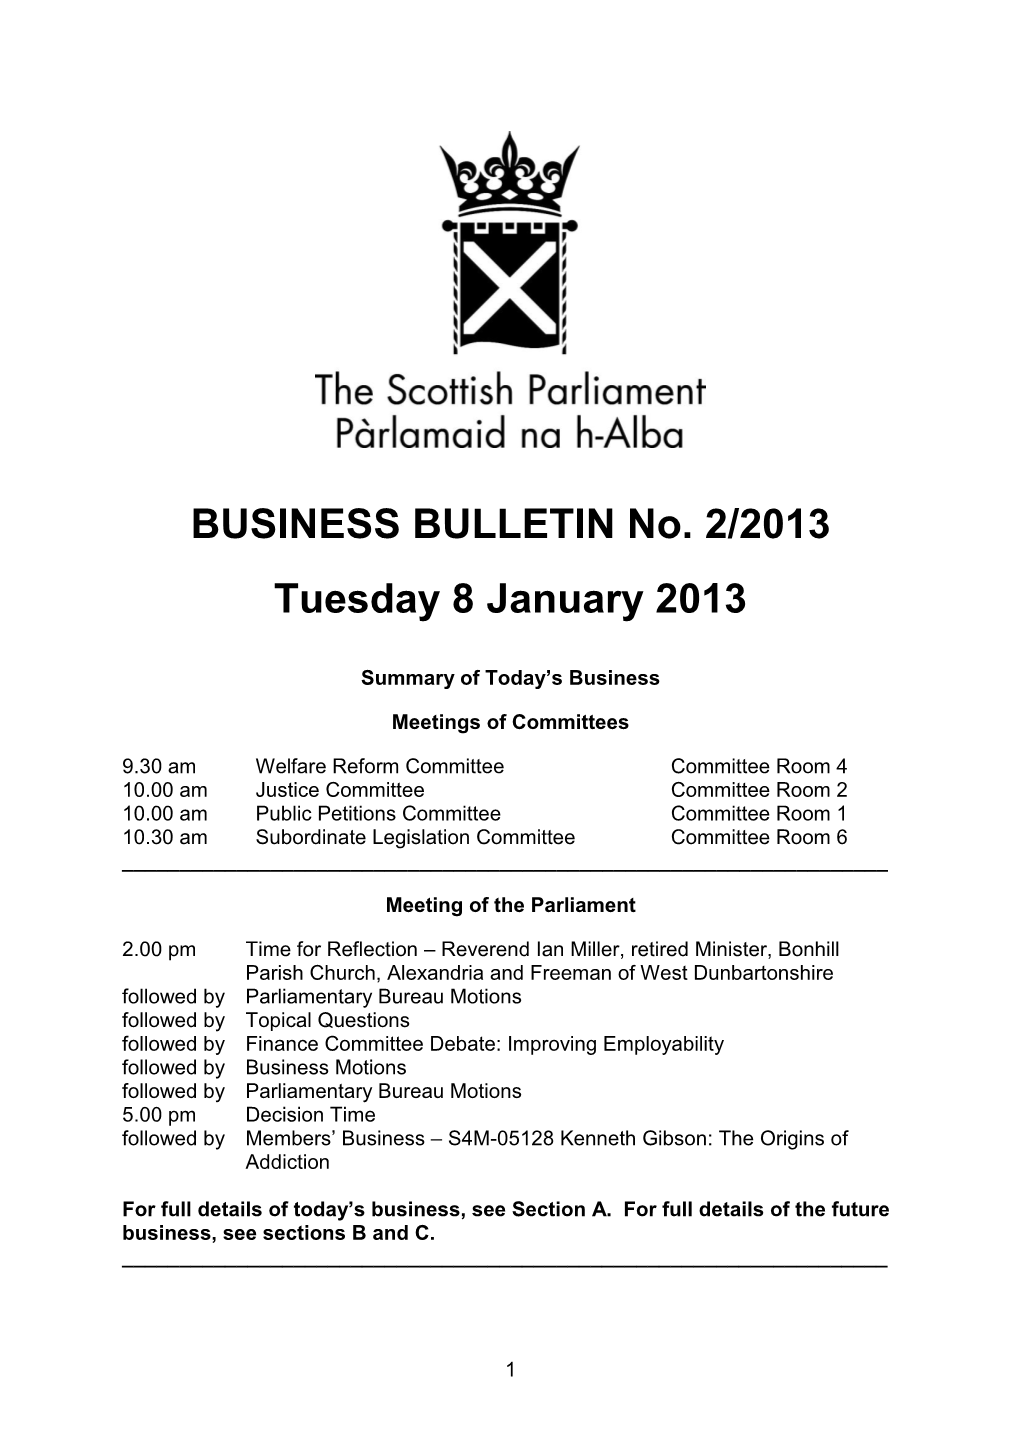 BUSINESS BULLETIN No. 2/2013 Tuesday 8 January 2013